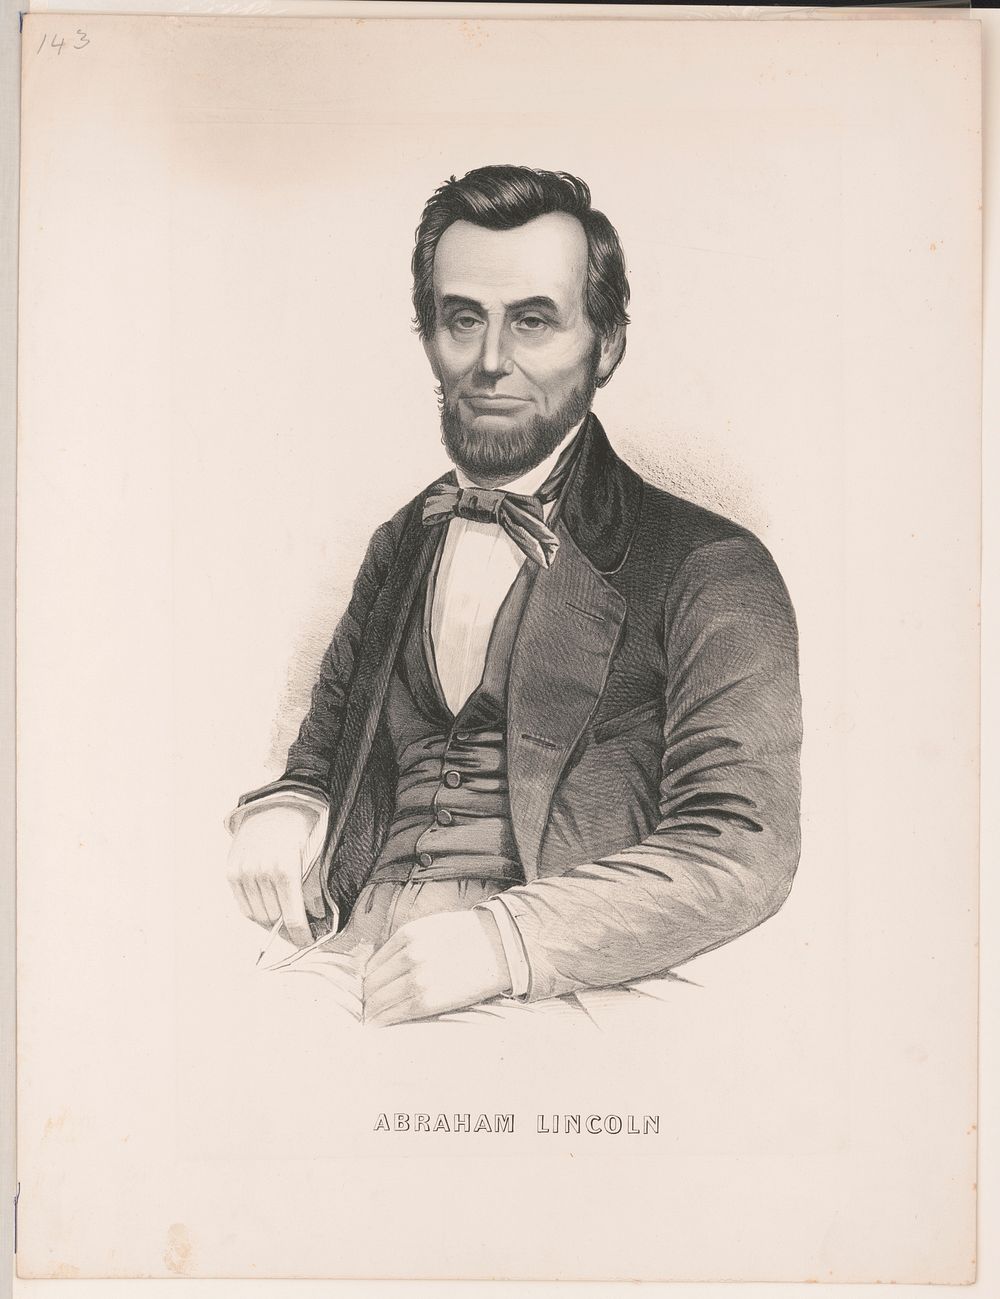 Abraham Lincoln. Half-length portrait seated